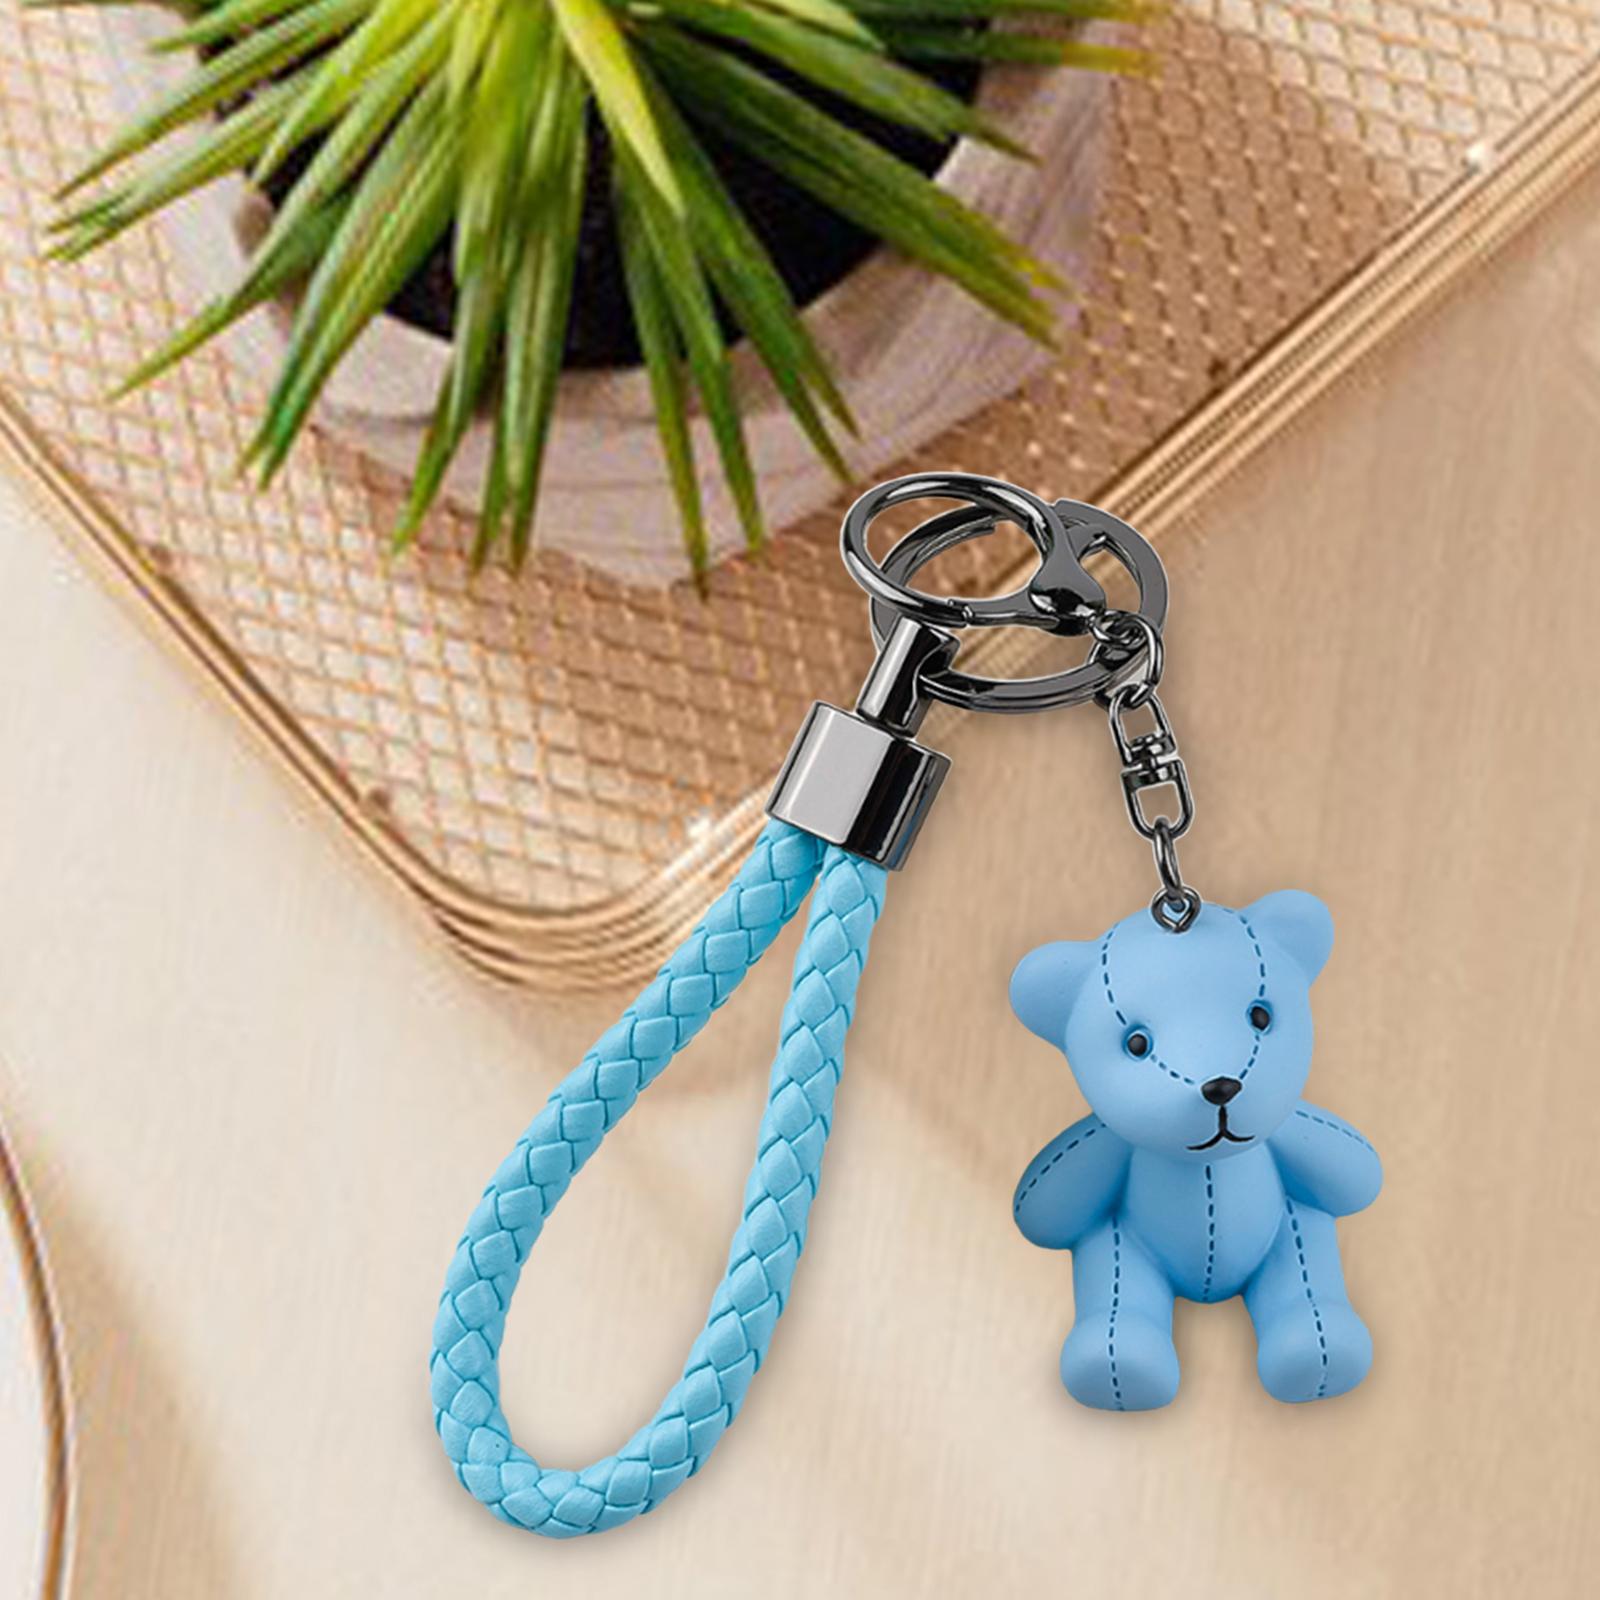 Bear Key Chain Pendant Resin Animal Pendant Creative Gift Car Bag Keychain Blue